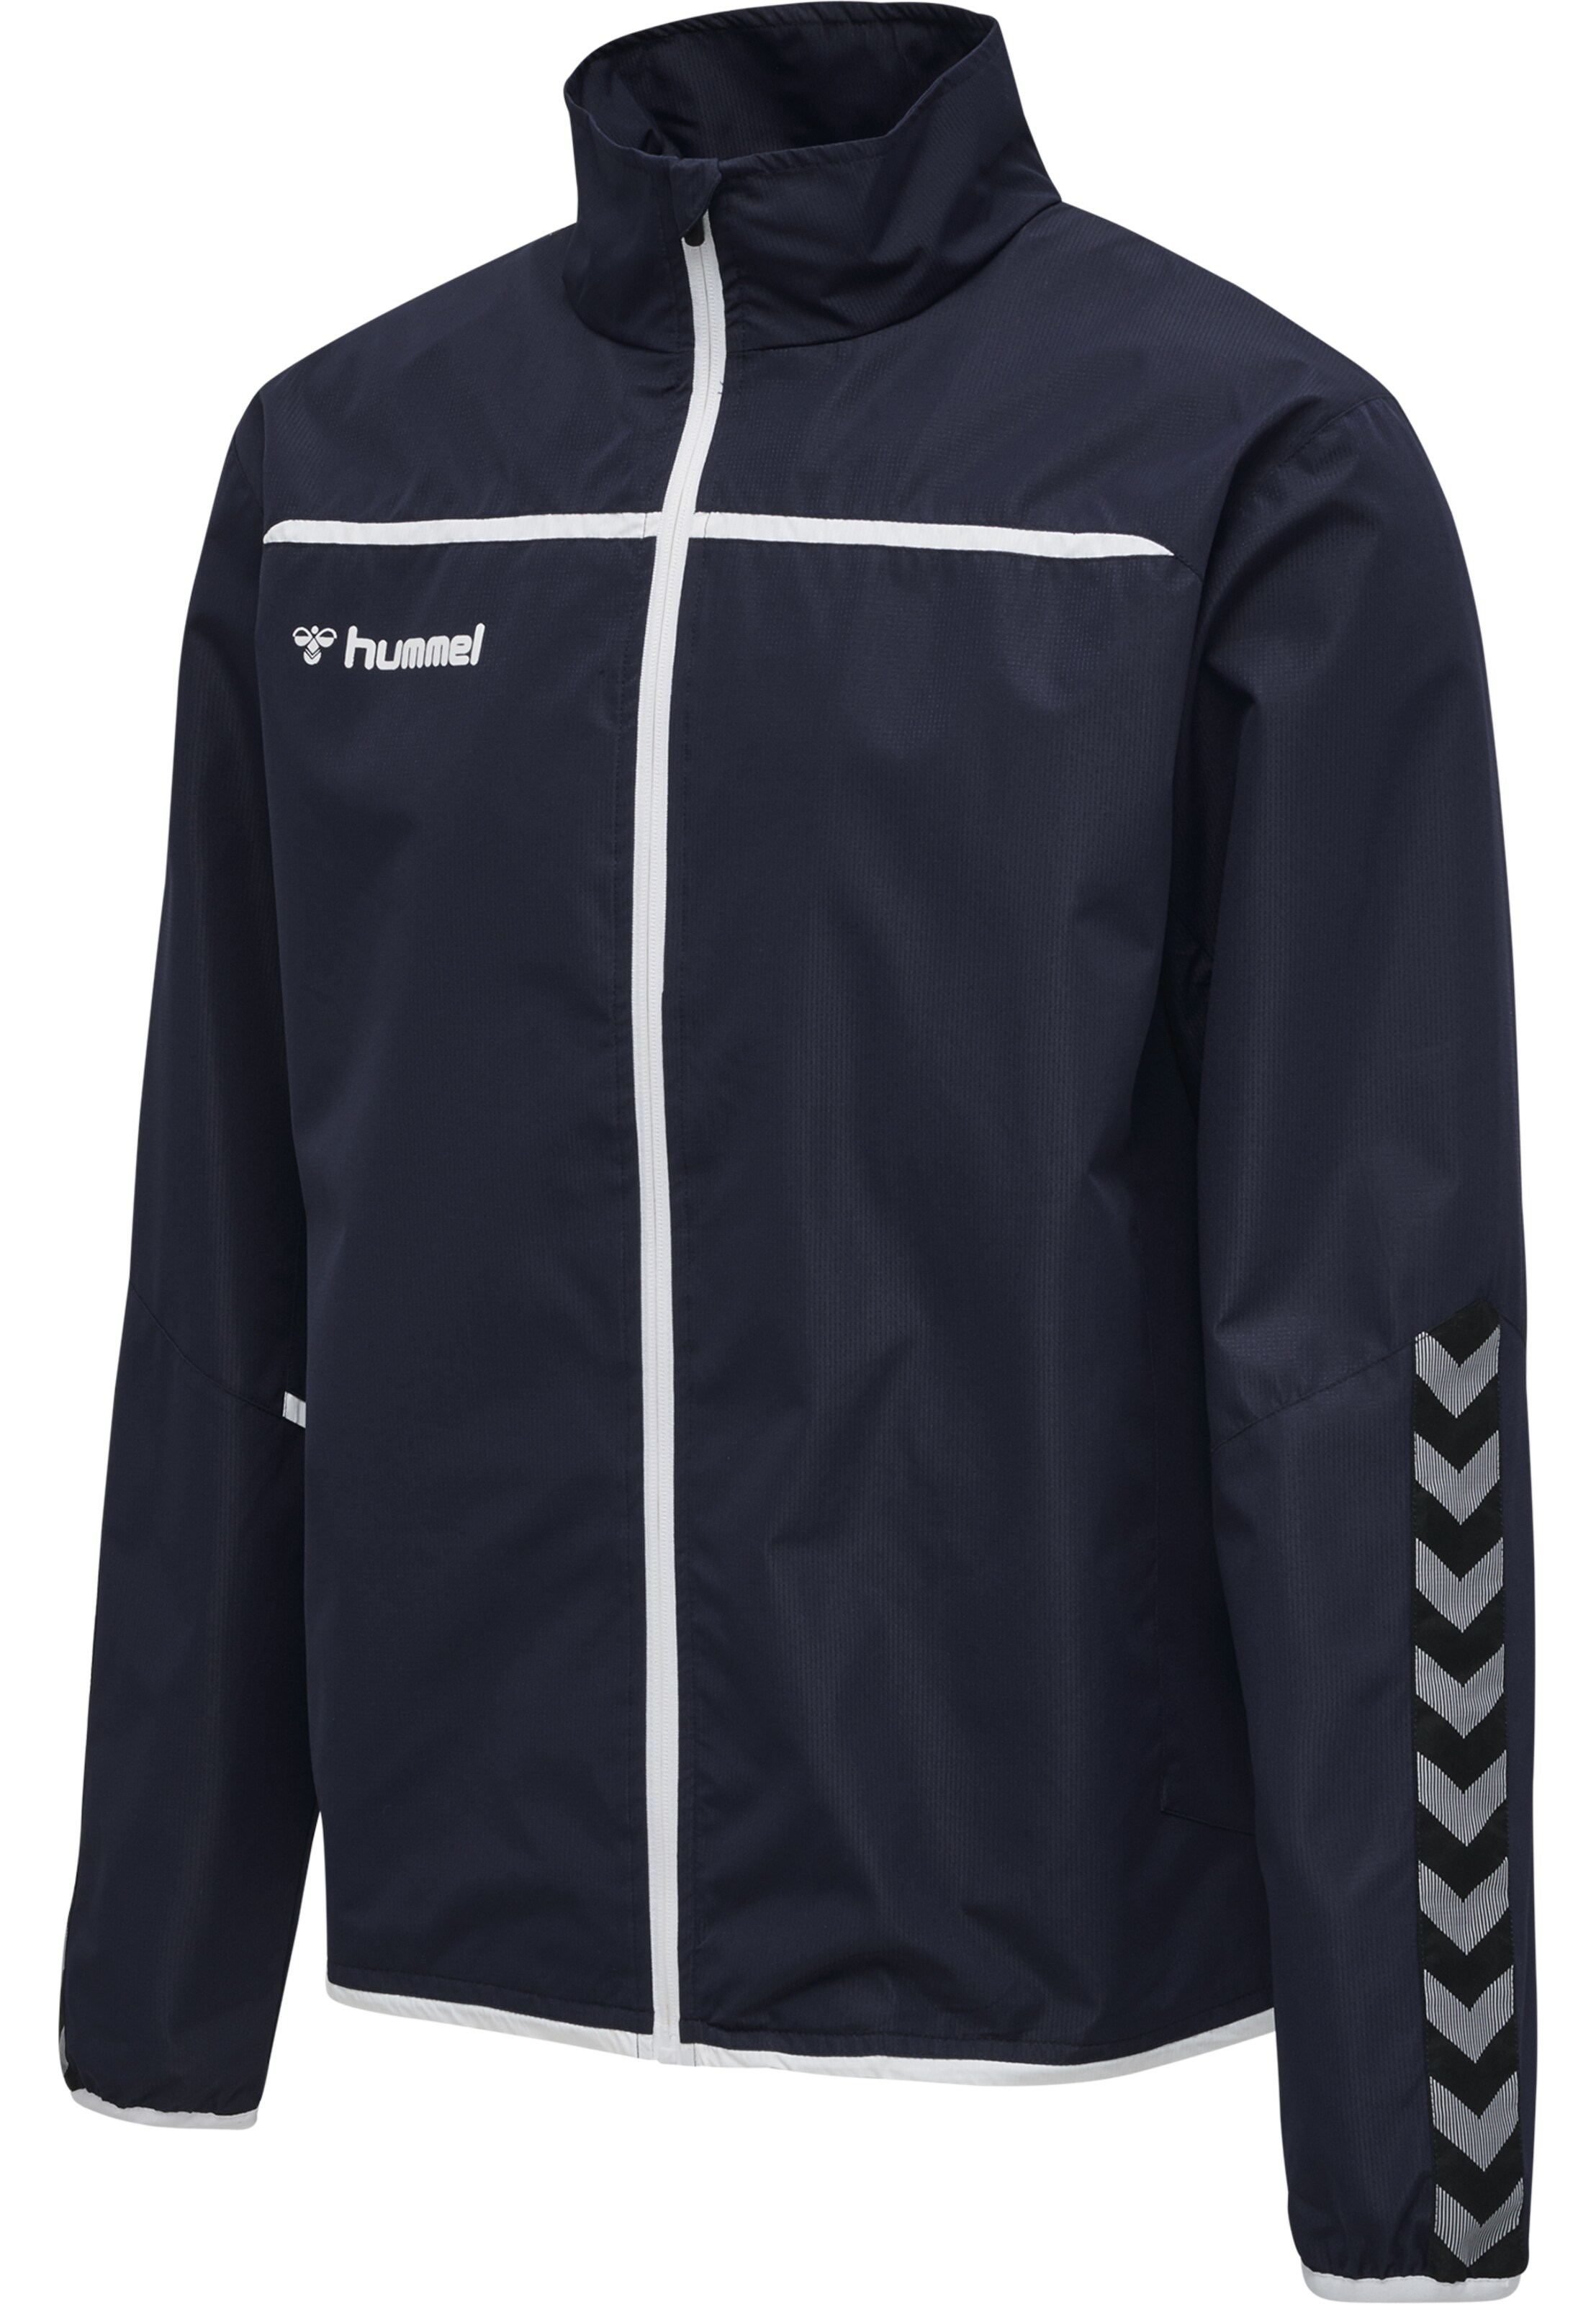 Männer Sportbekleidung Hummel Trainingsjacke in Nachtblau - WE59800